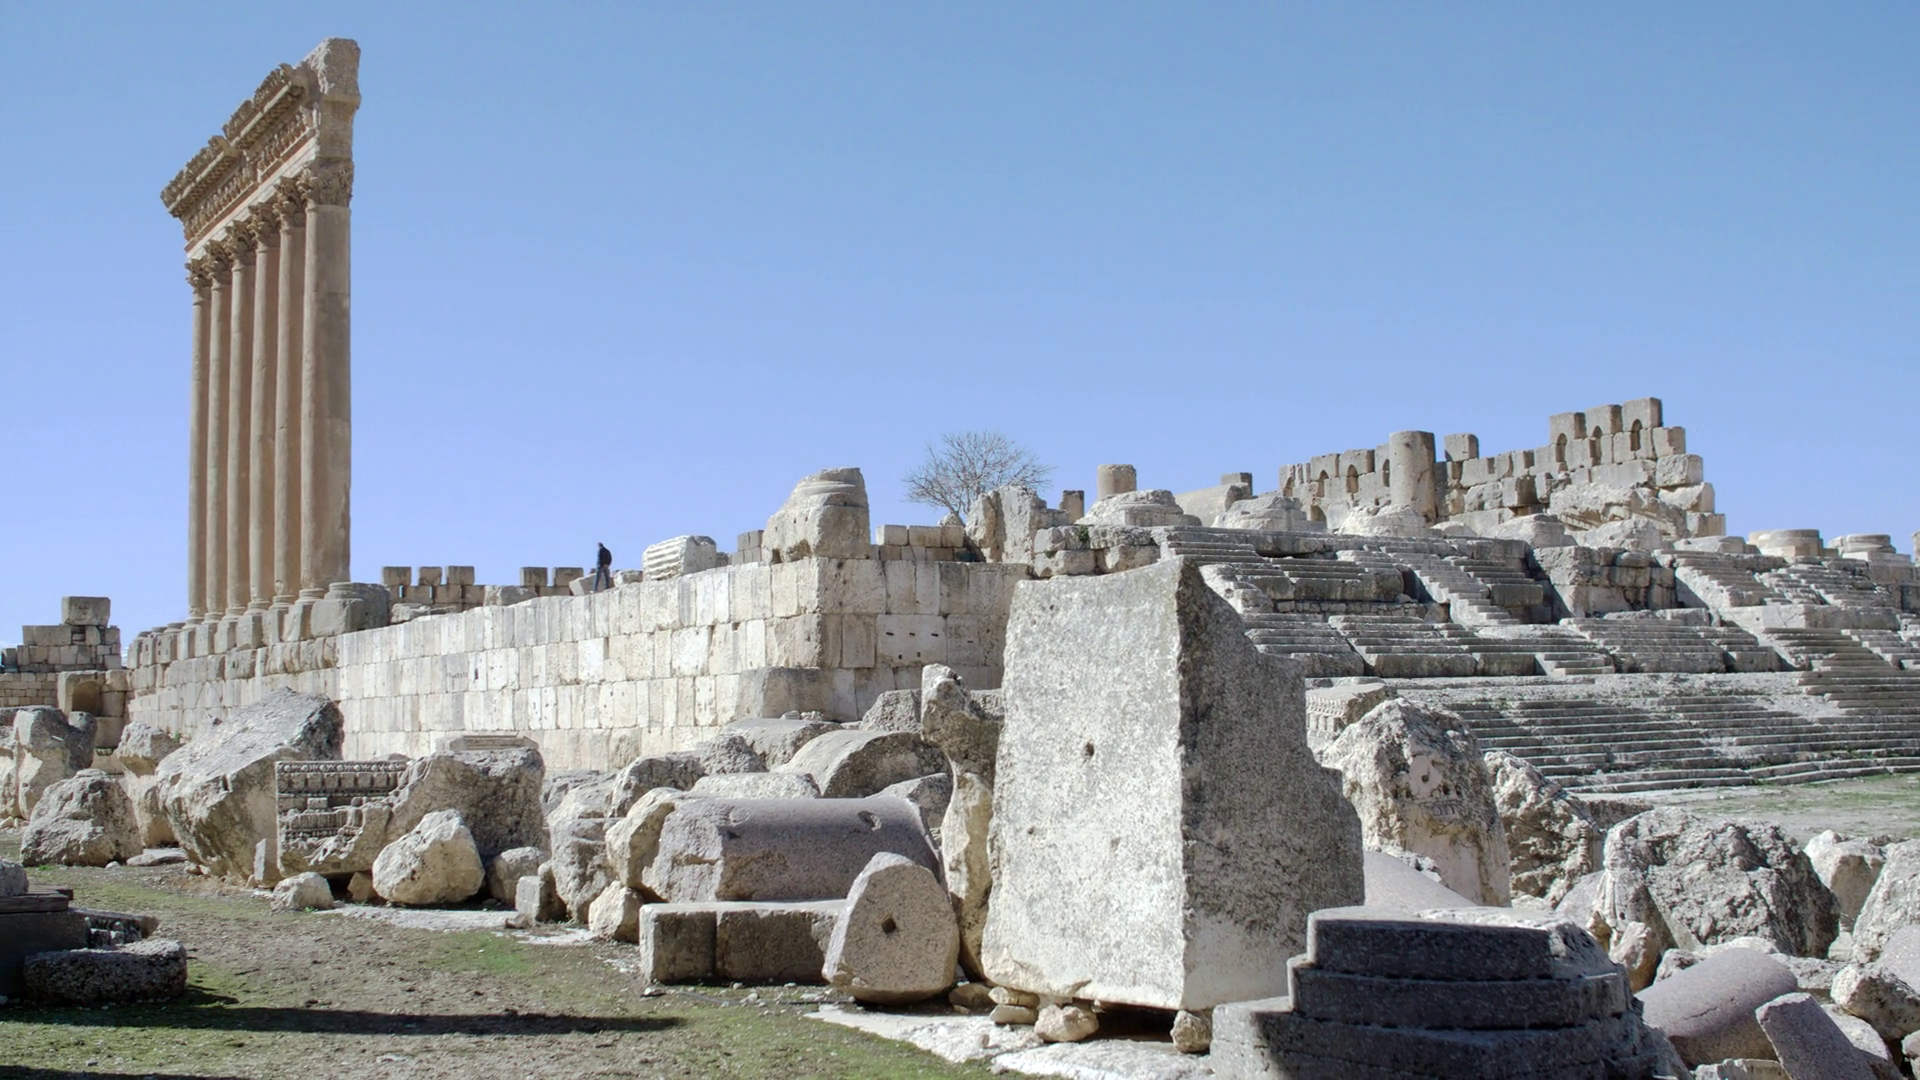 Pan left to Temple of Jupiter, Baalbek's Roman ruins, Lebanon ...